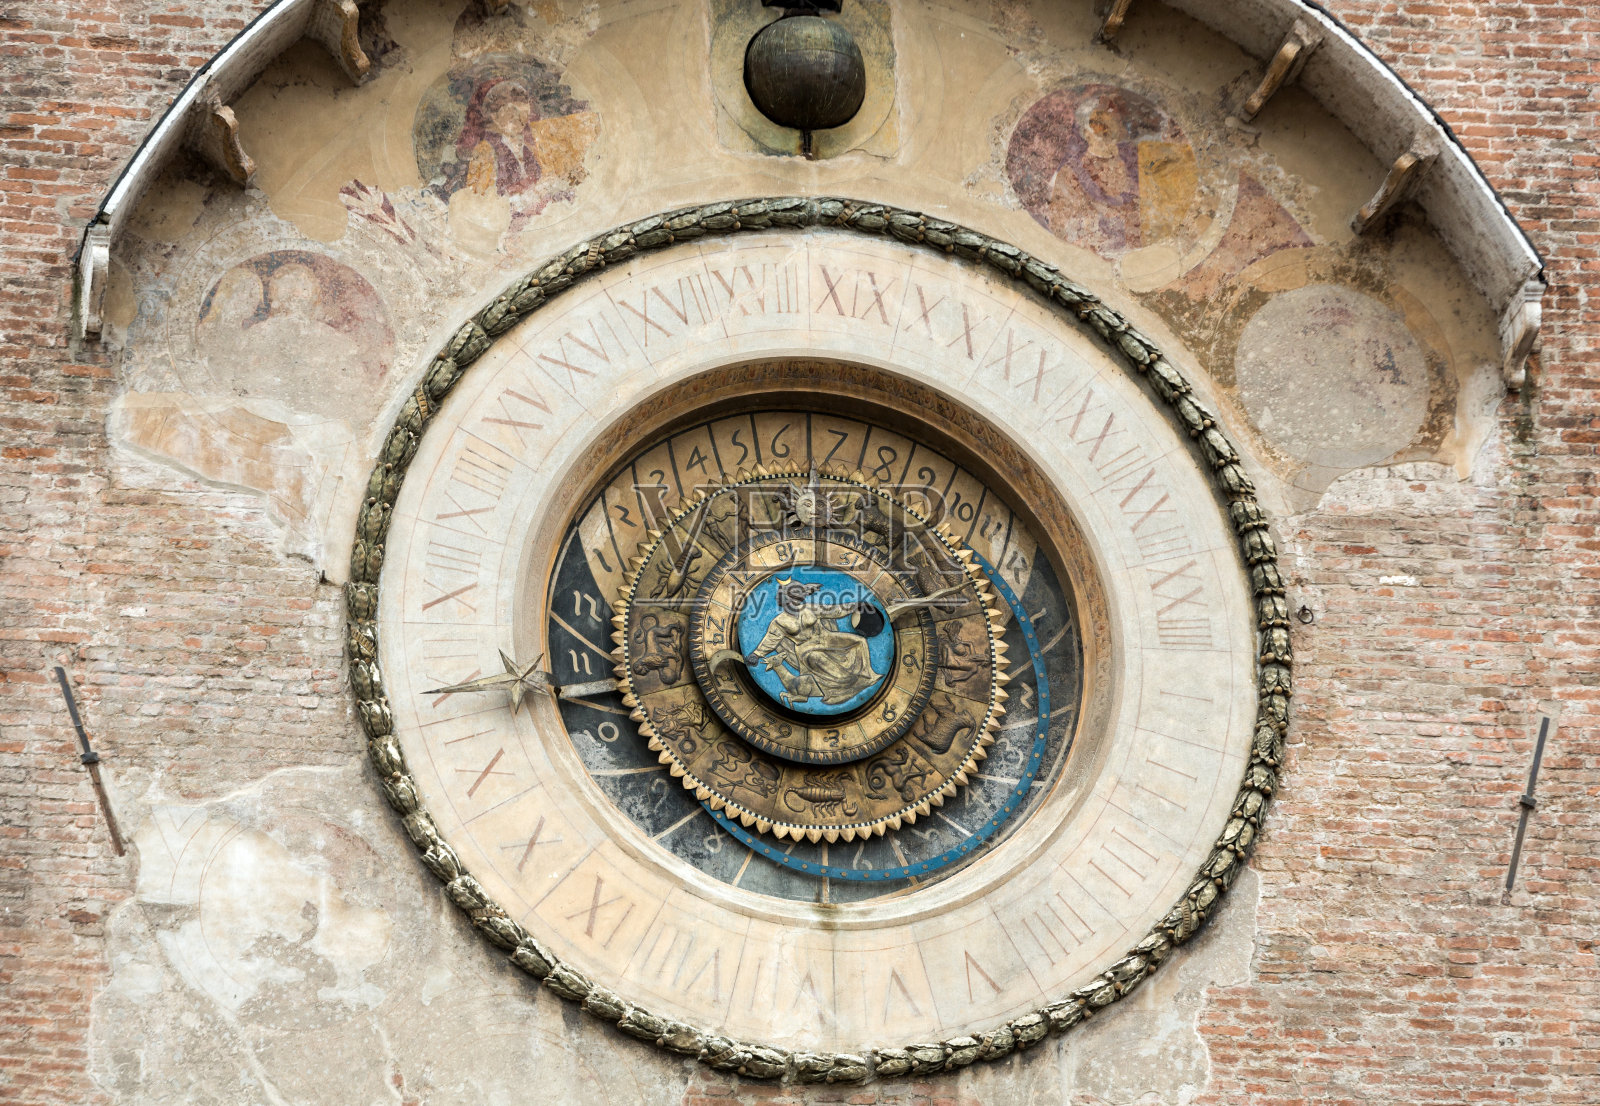 意大利曼图亚的“钟塔”(Torre dell' orologio)照片摄影图片